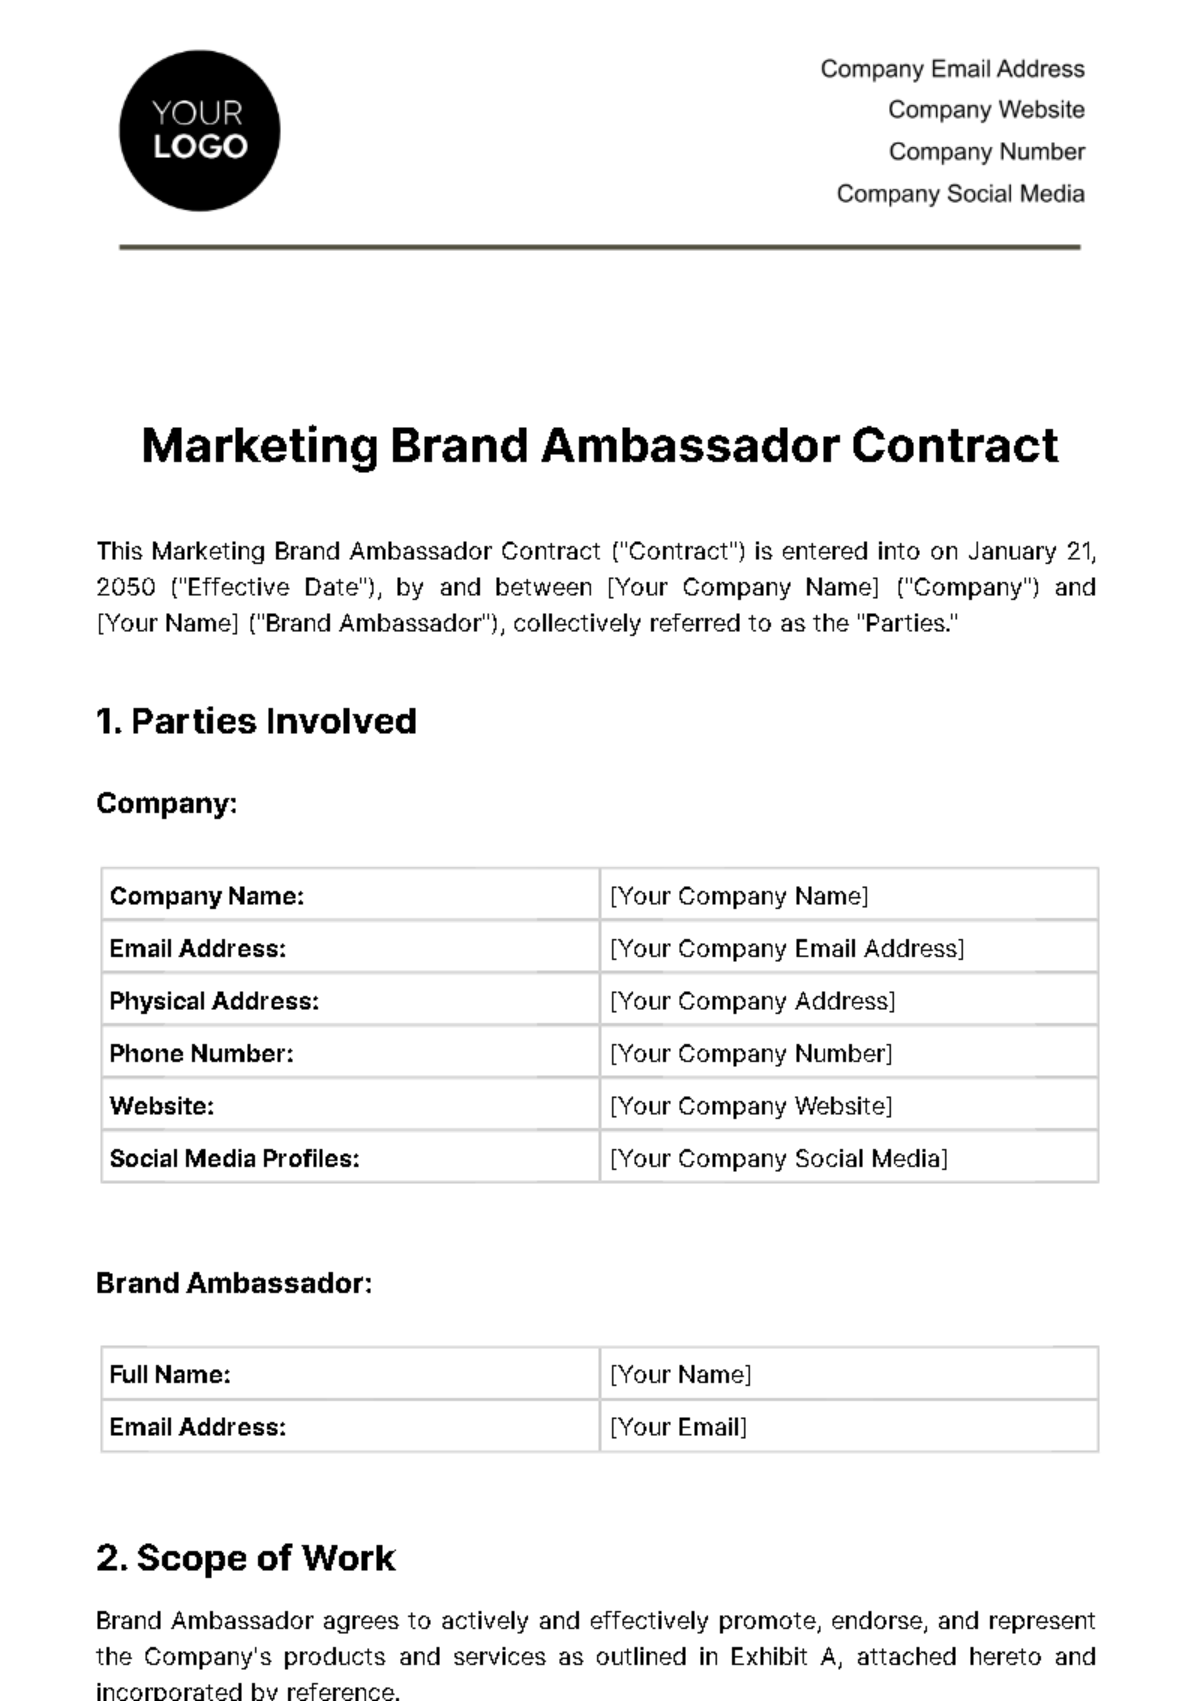 Marketing Brand Ambassador Contract Template